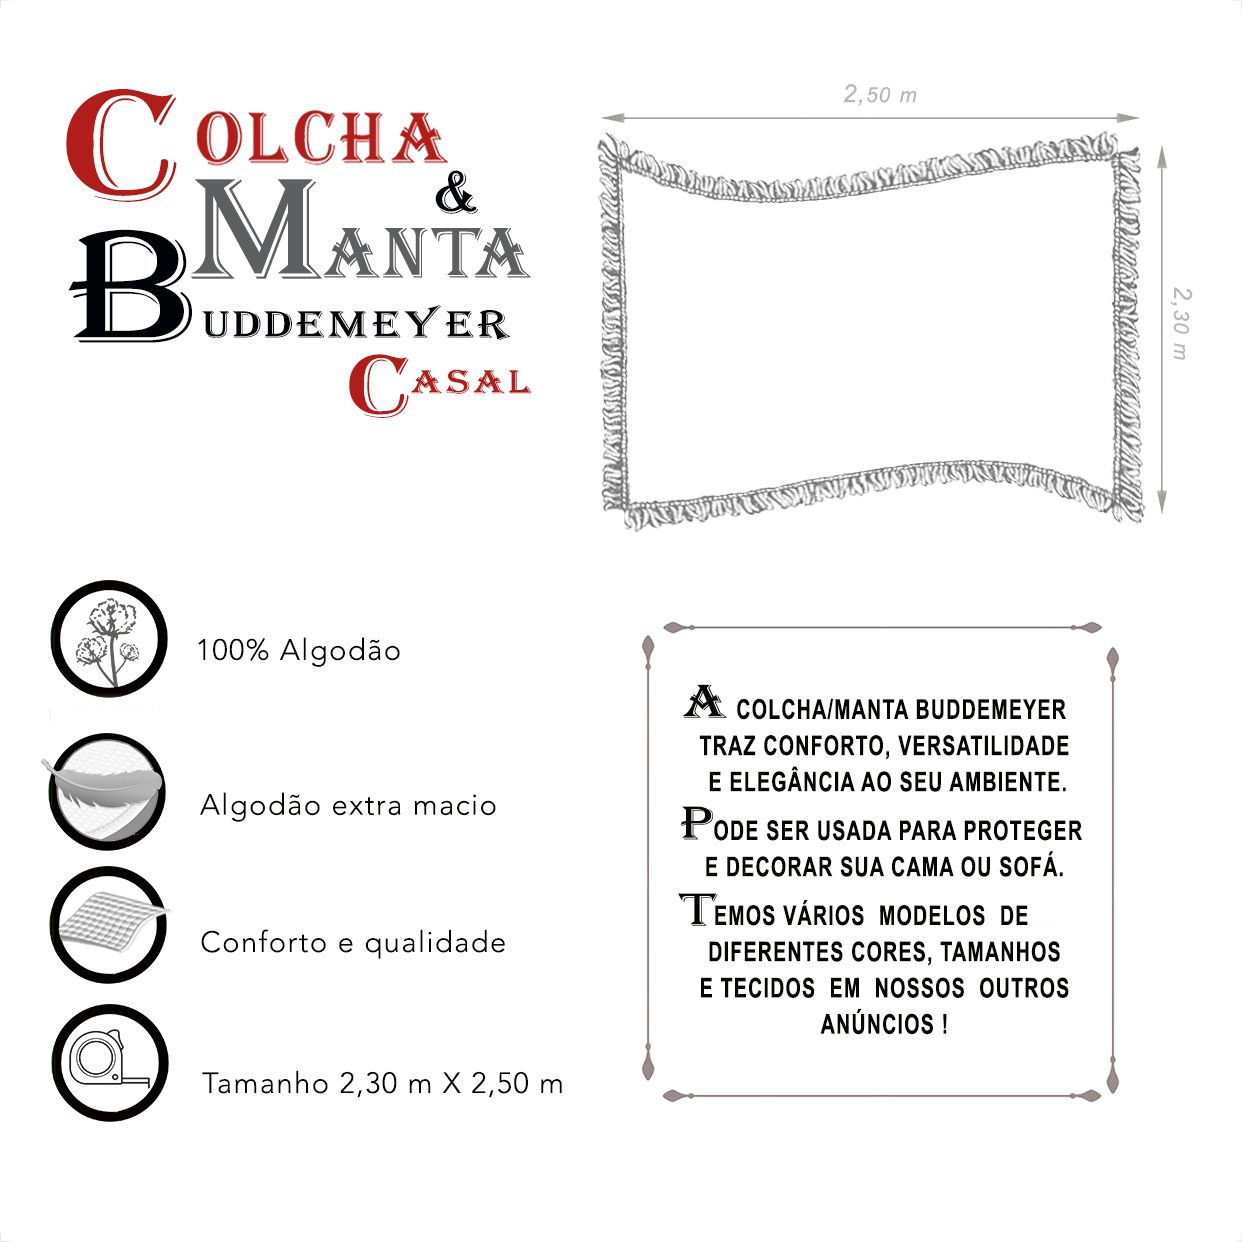 Manta e Colcha Buddemeyer Casal (2,30m x 2,50m)